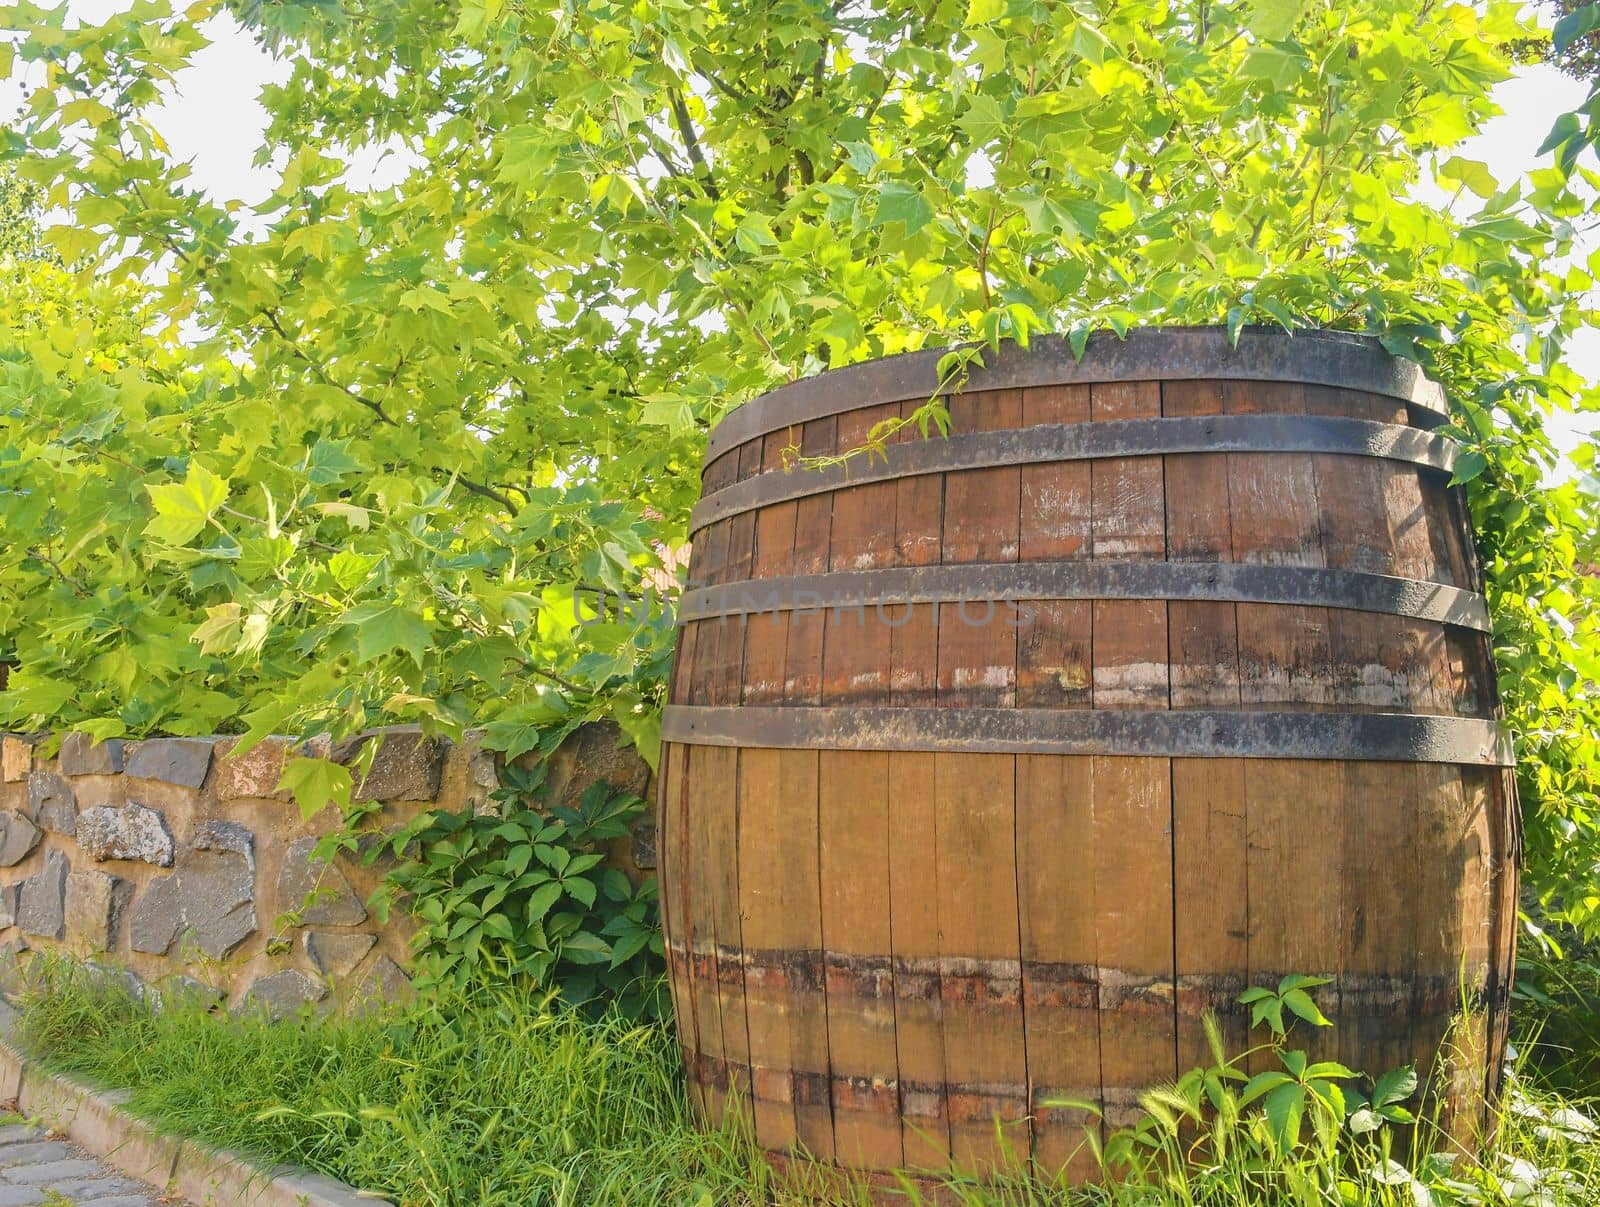 Old rustic wine barrel. Wine background in Europe. Czech Republic, South Moravia. 